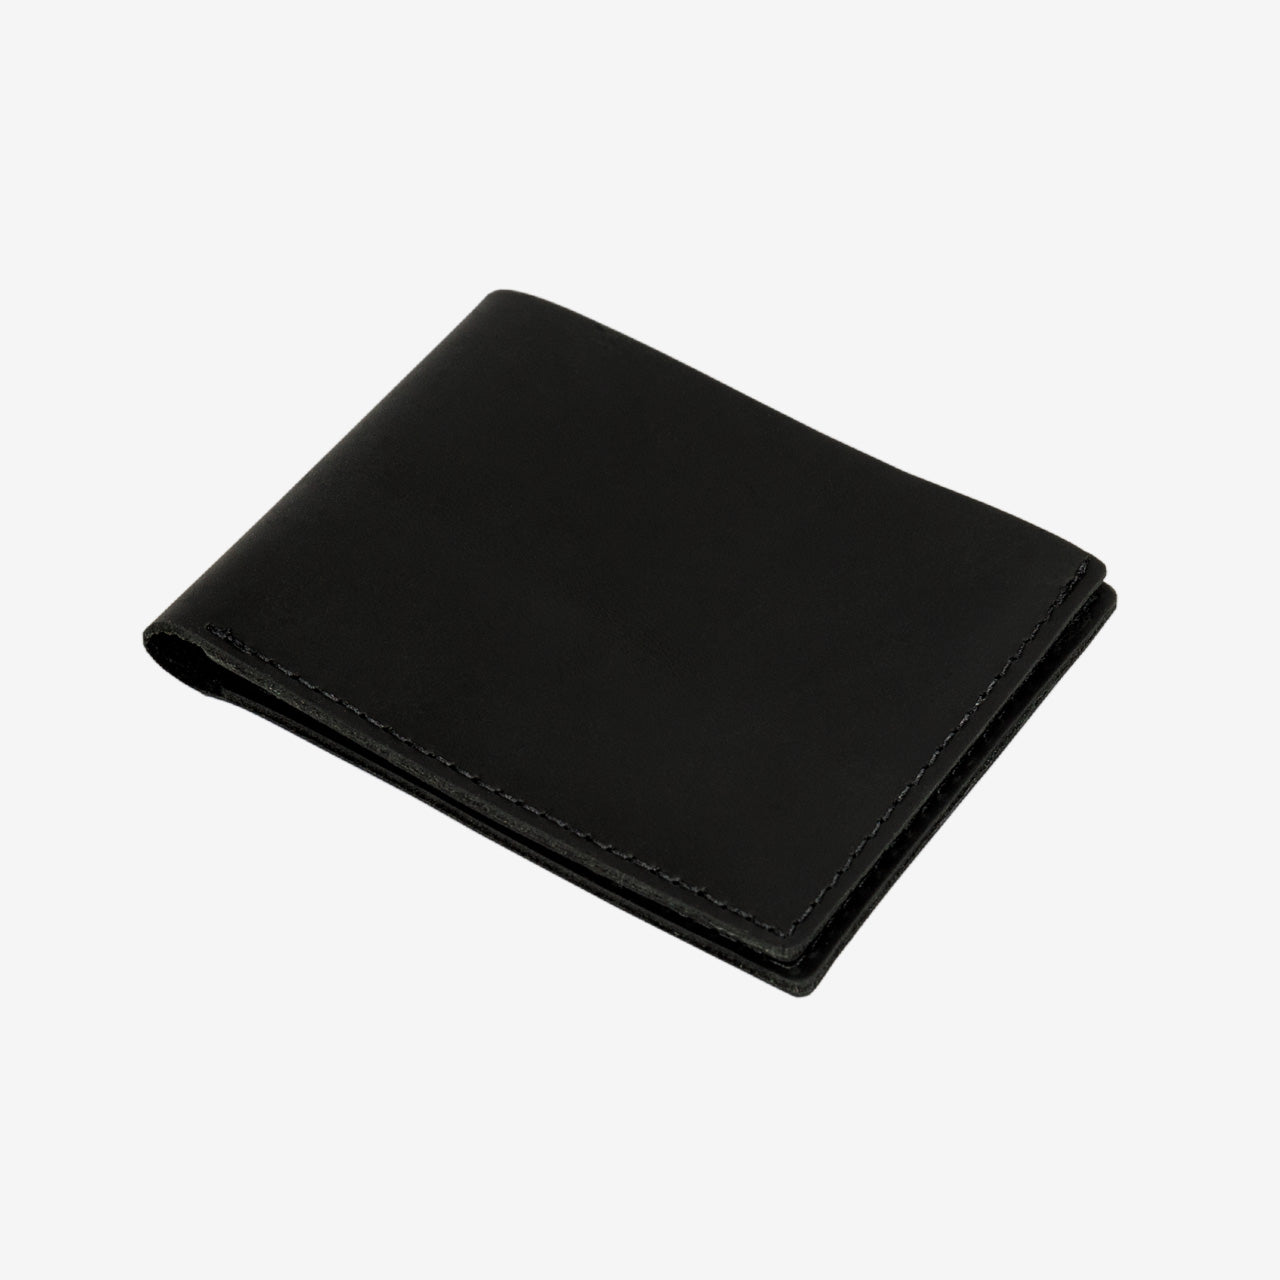 sleepwalk ltd bi fold leather wallet black